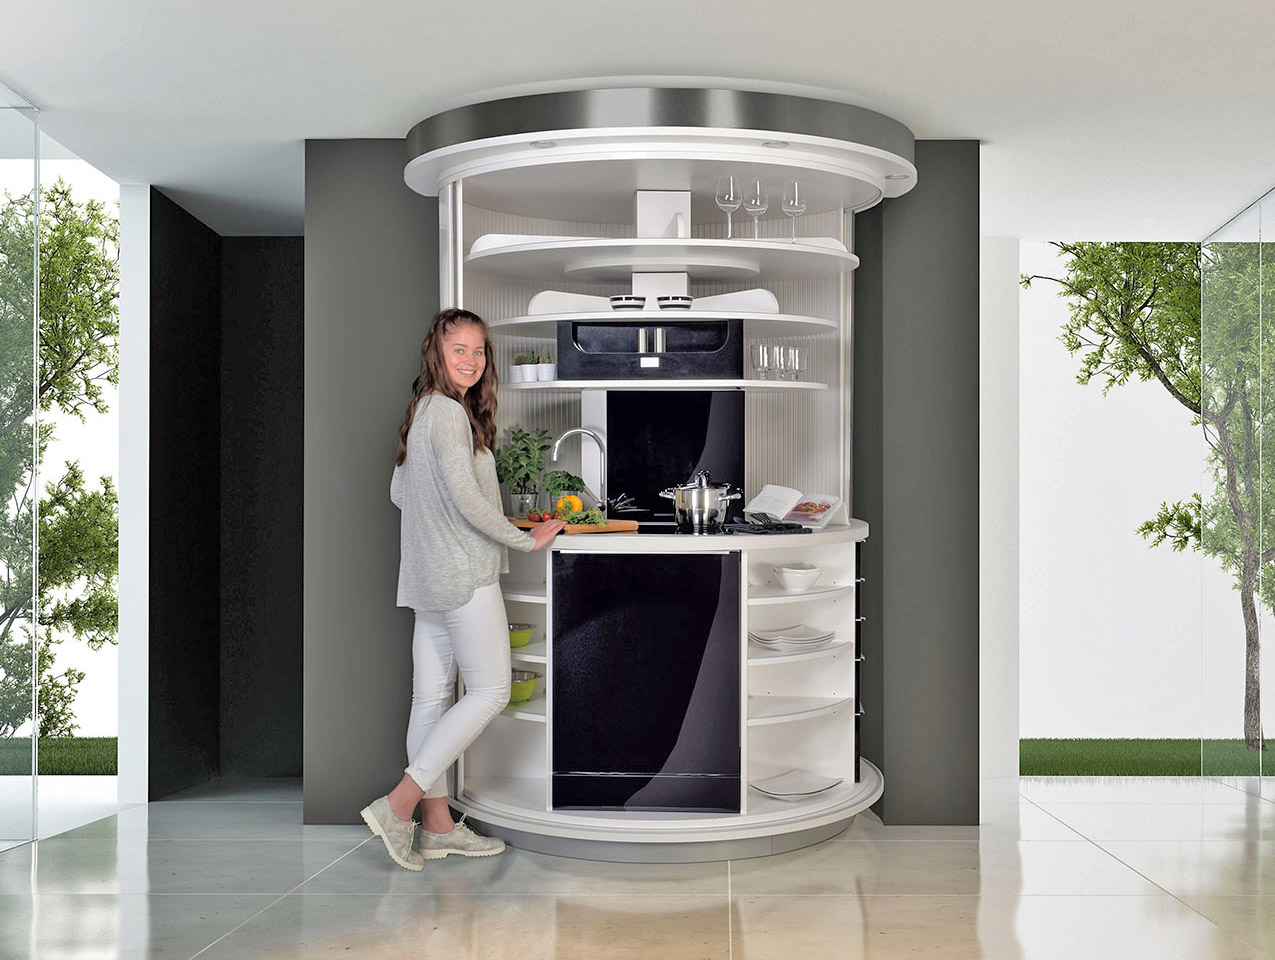 Rotating Circle Kitchen - Futuristic minimal design space-saving kitchen that spins